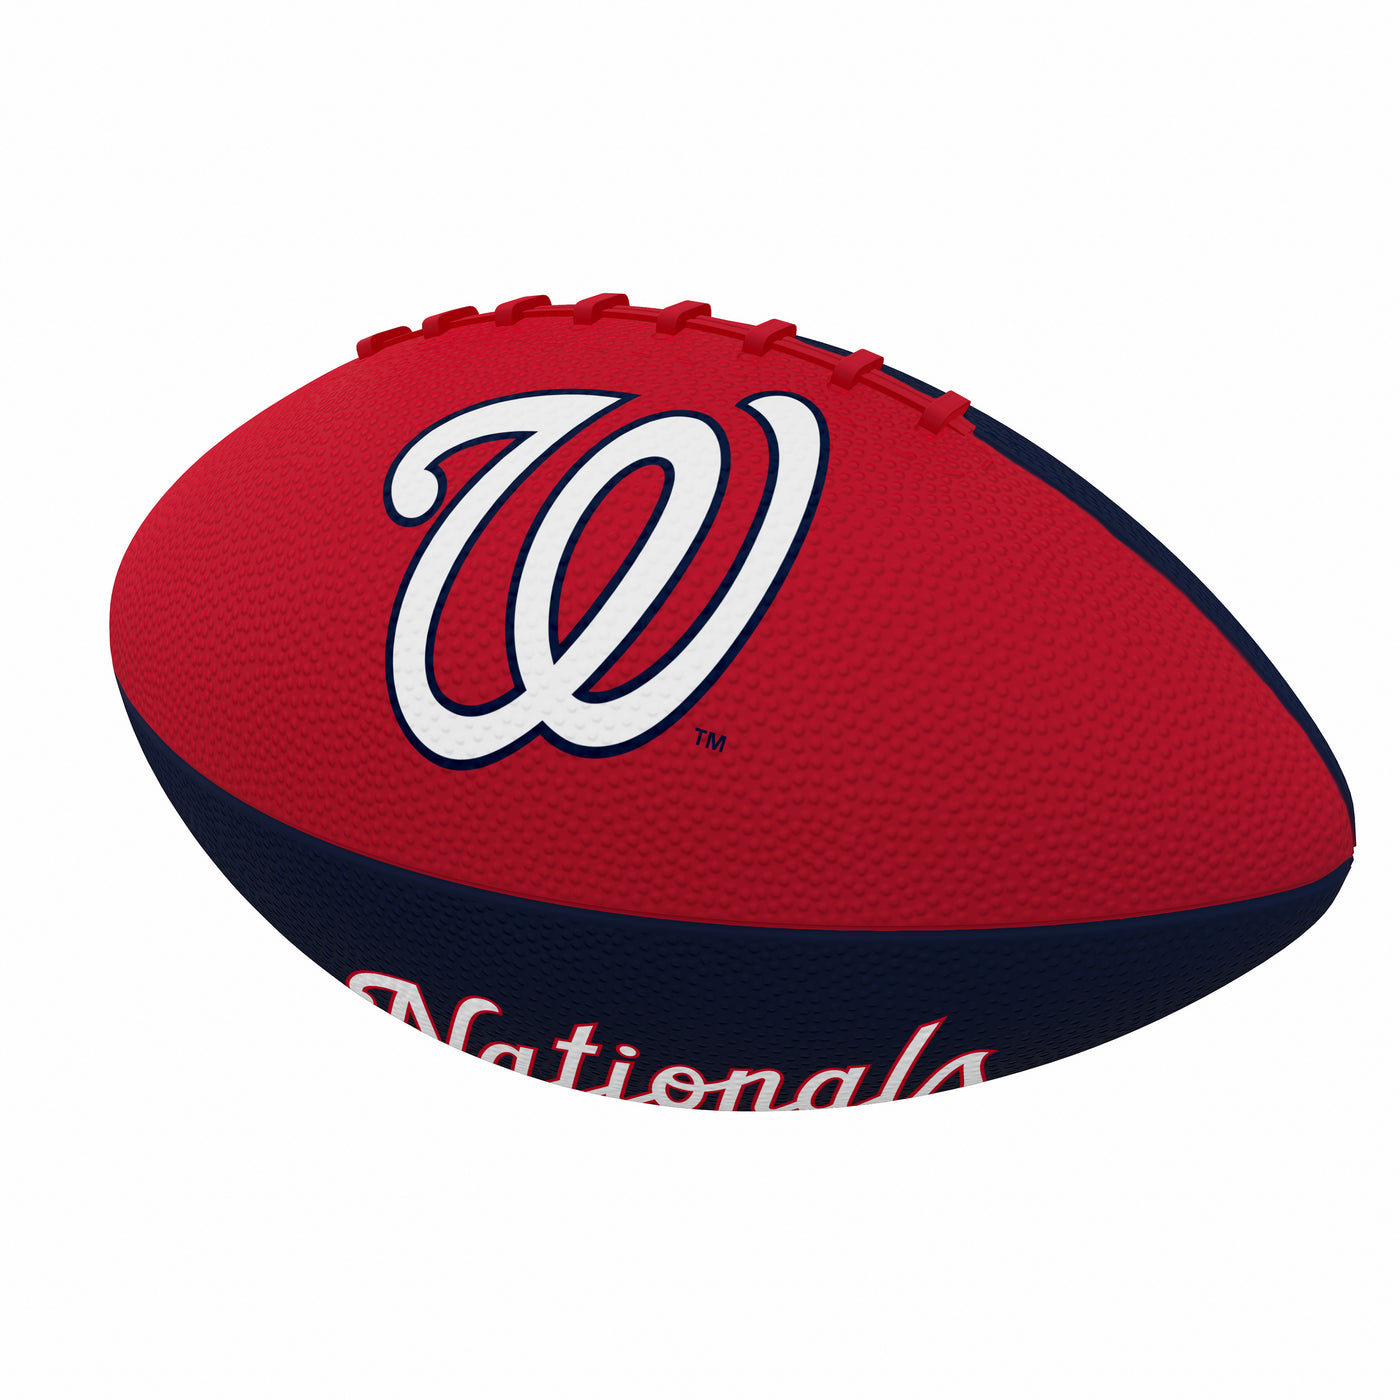 Washington Nationals Pinwheel Junior Size Rubber Football